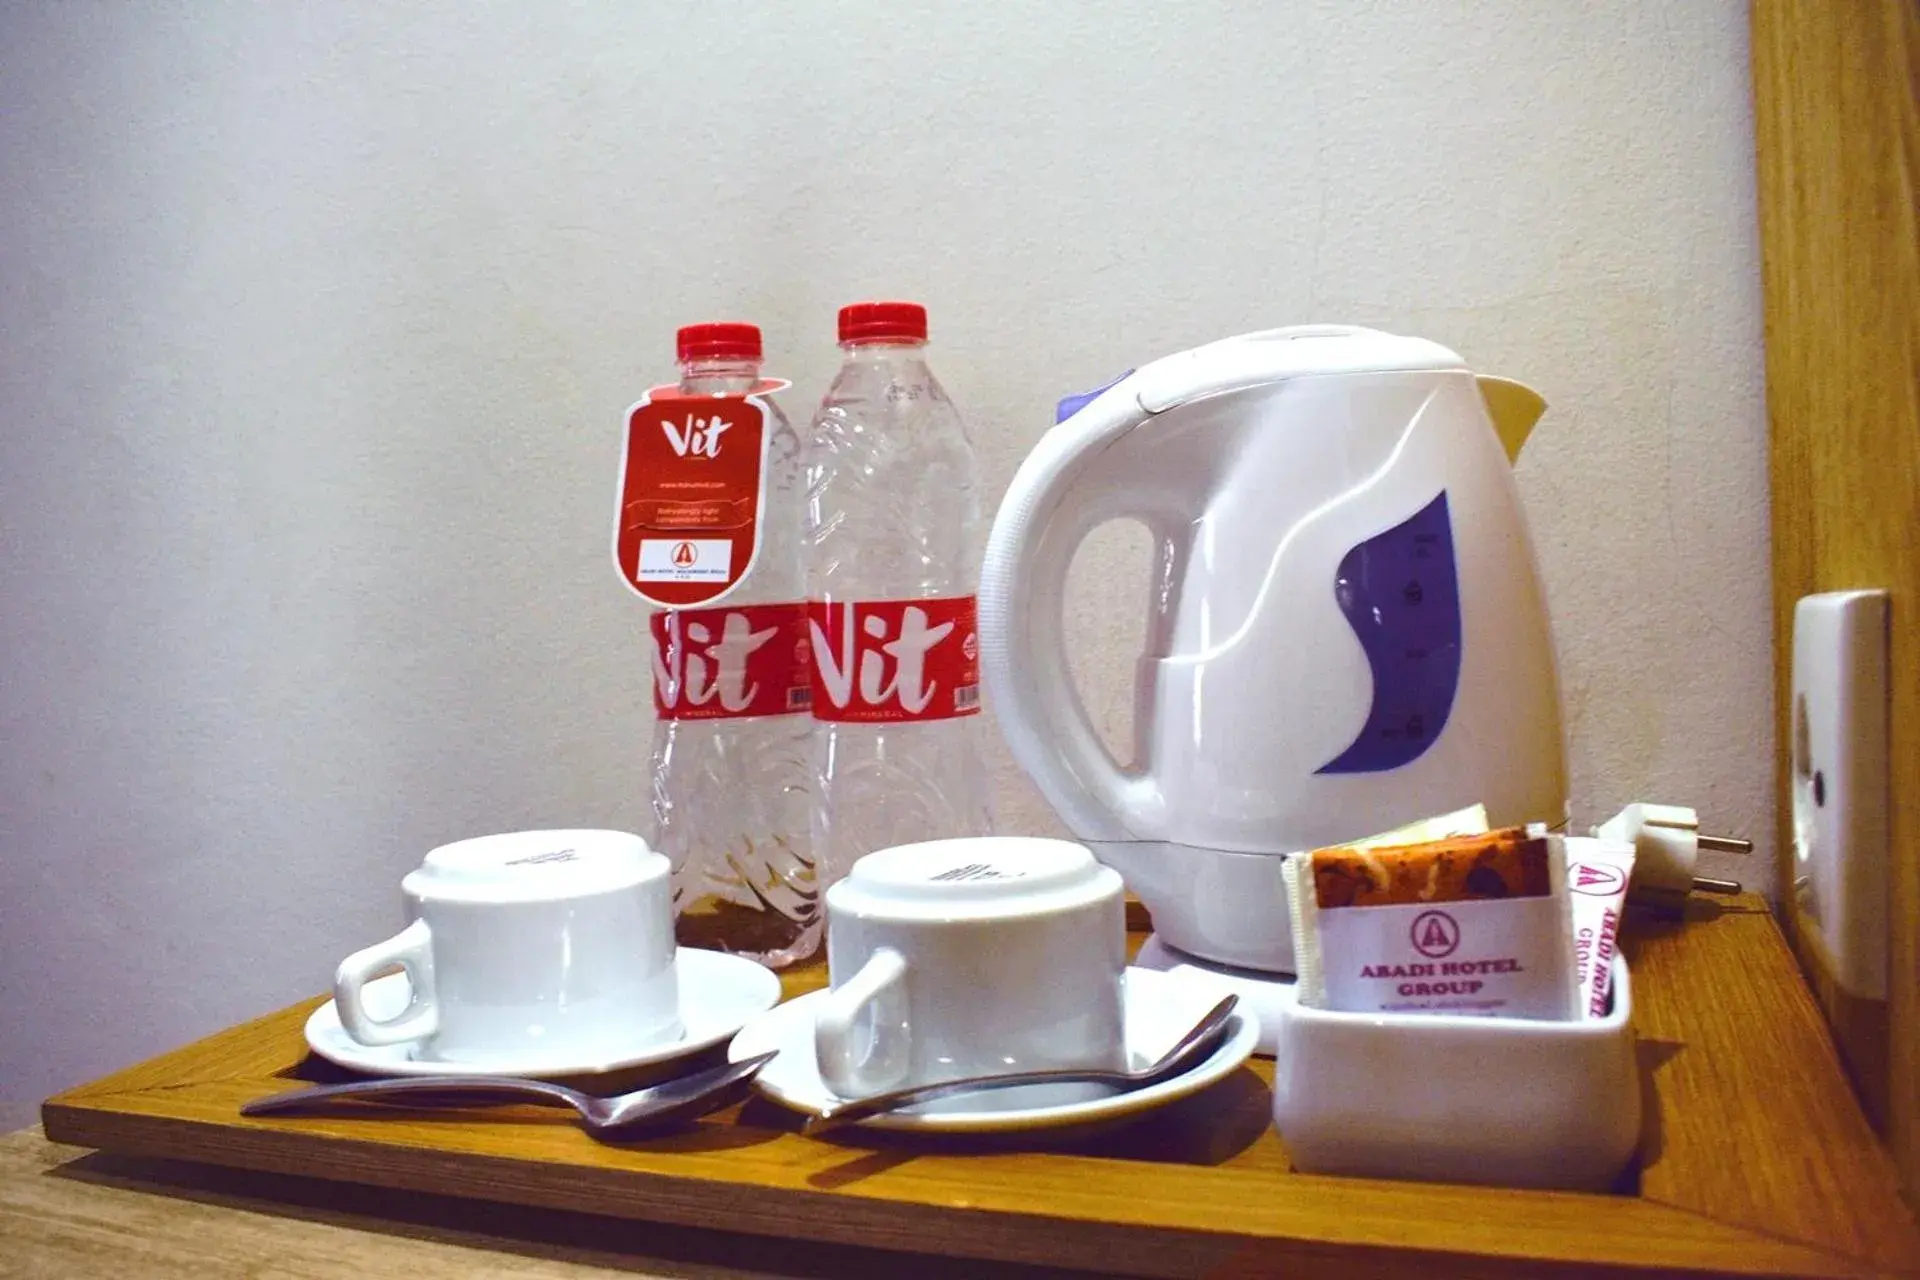 Coffee/Tea Facilities in Abadi Hotel Malioboro Yogyakarta by Tritama Hospitality